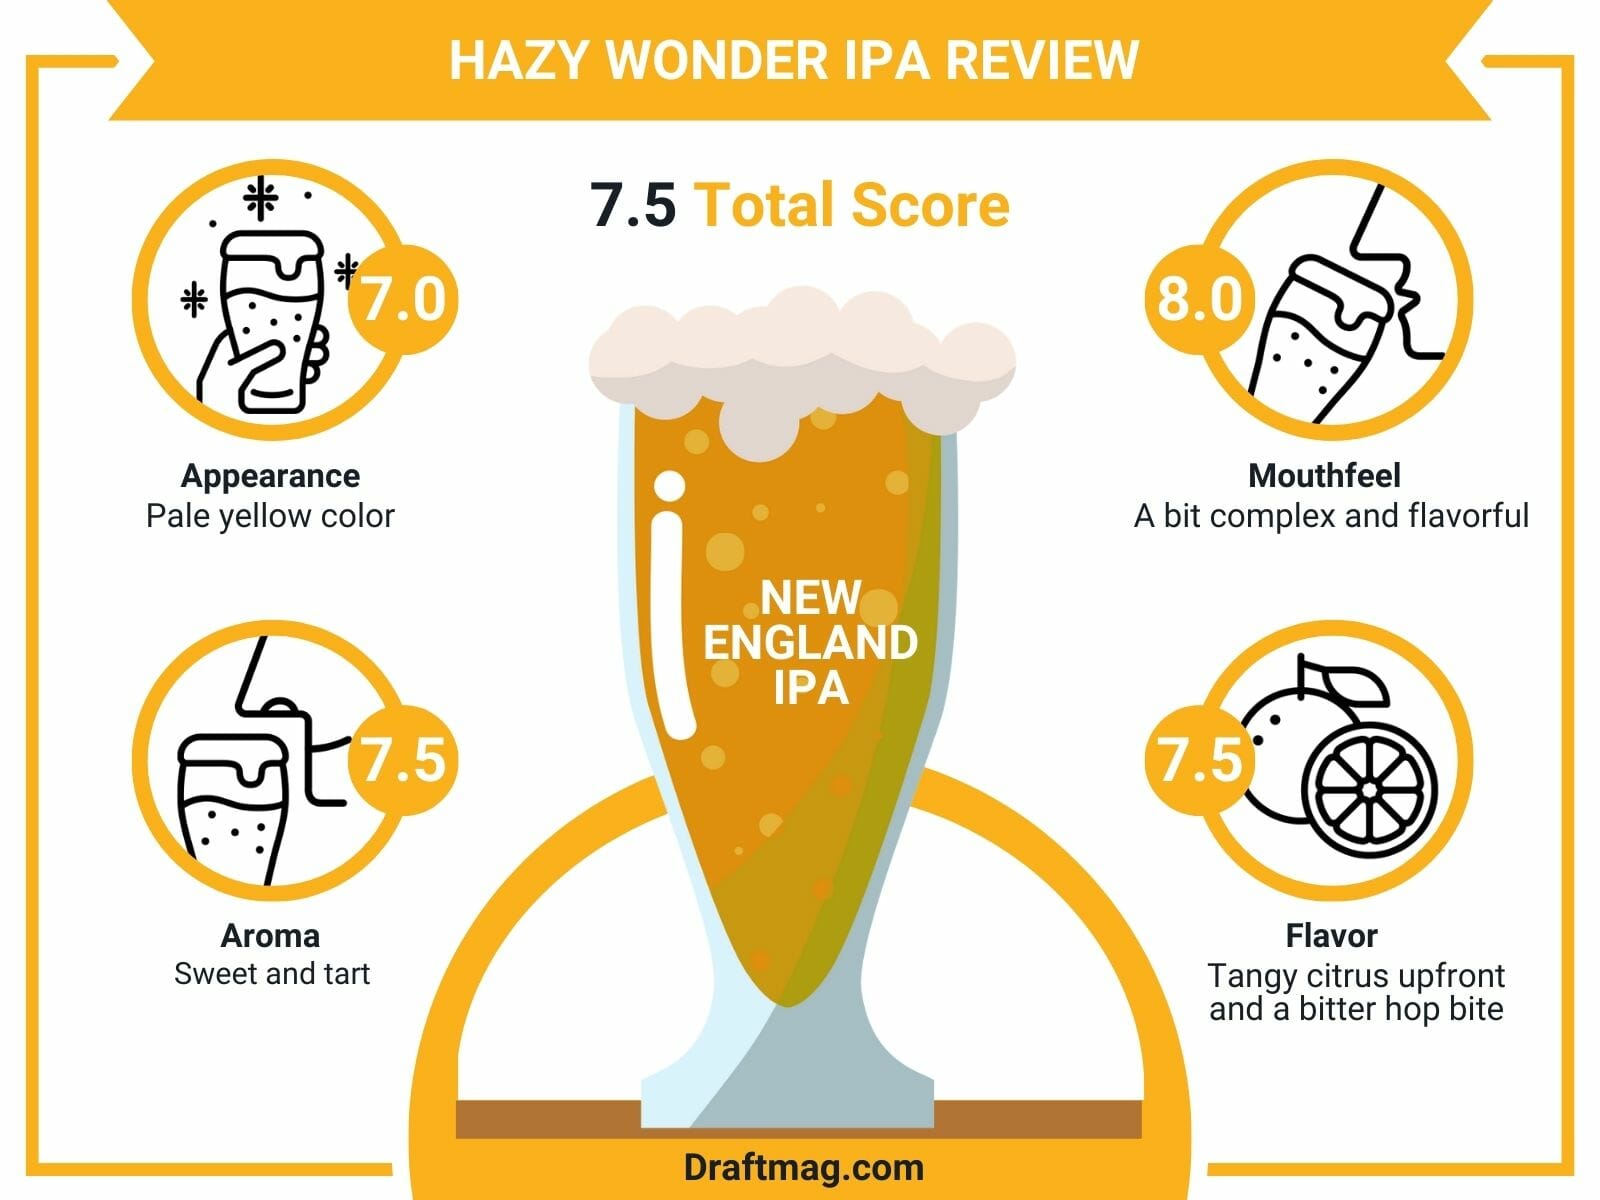 Hazy Wonder IPA Review Infographic